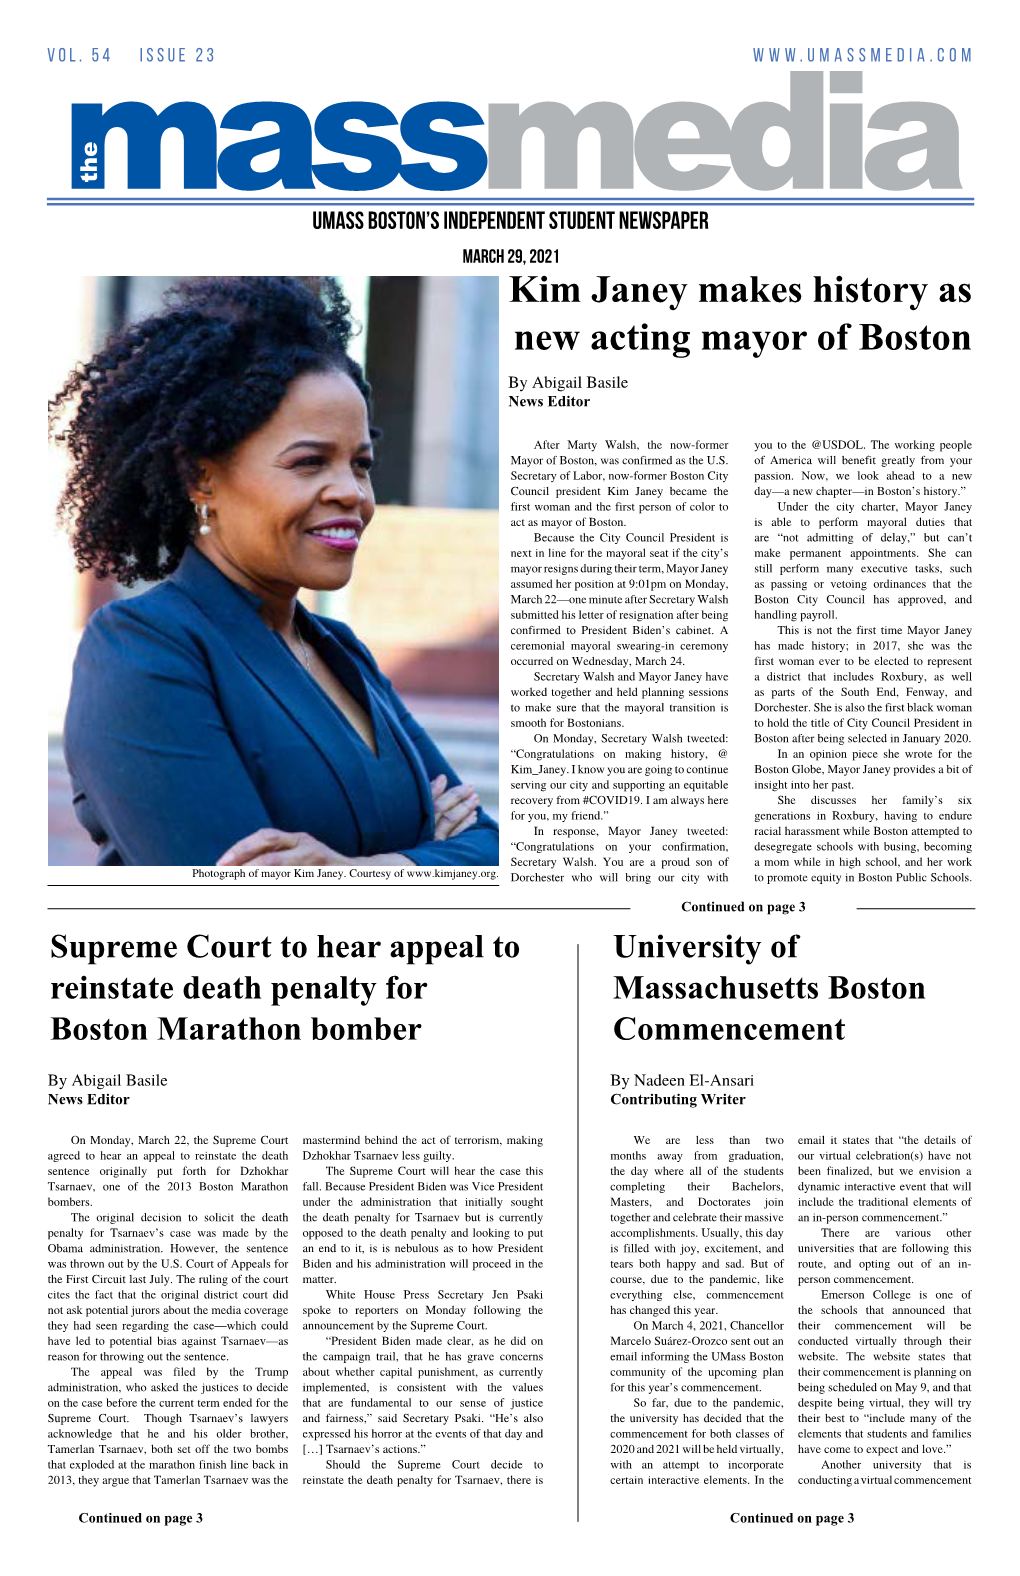 Kim Janey Makes History As New Acting Mayor of Boston by Abigail Basile News Editor